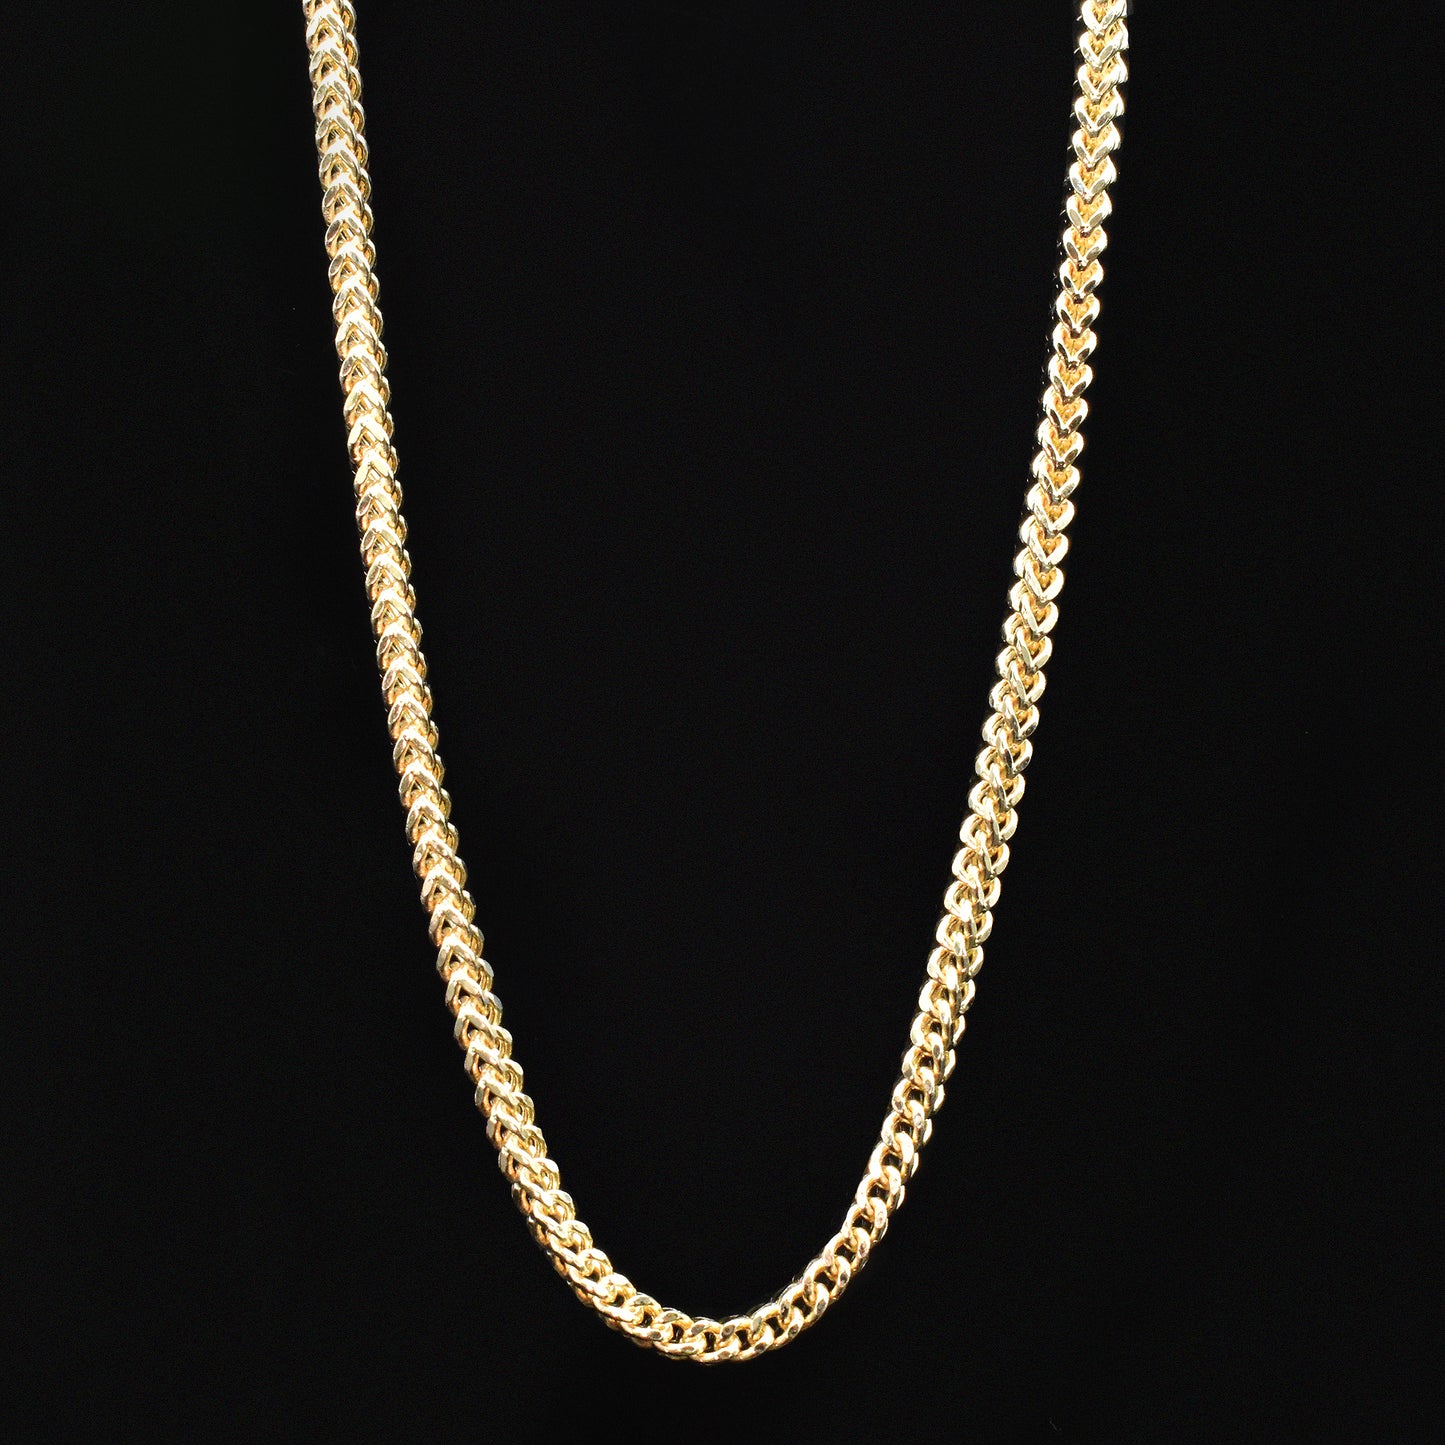 franco gold chain for men unisex necklace